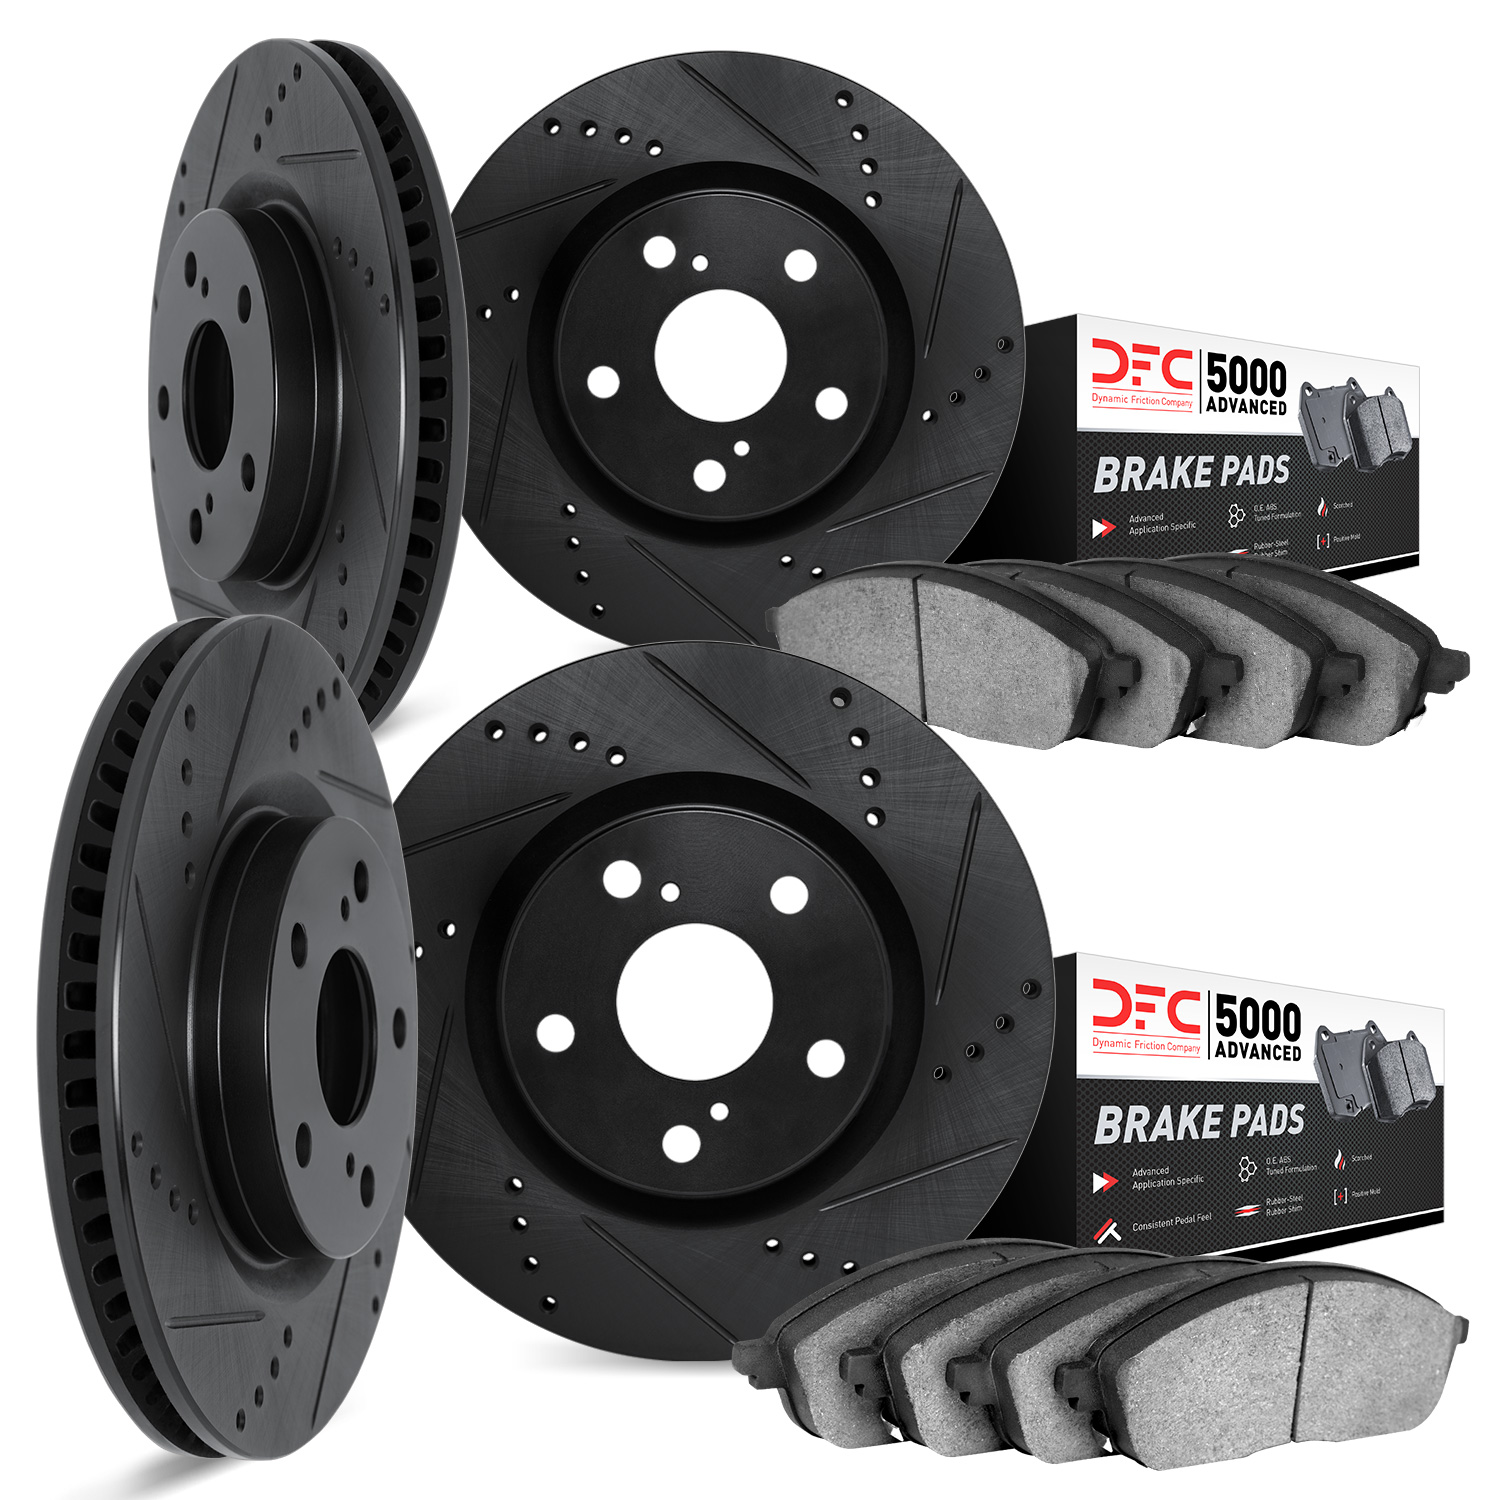 8504-54295 Drilled/Slotted Brake Rotors w/5000 Advanced Brake Pads Kit [Black], 2013-2014 Ford/Lincoln/Mercury/Mazda, Position: